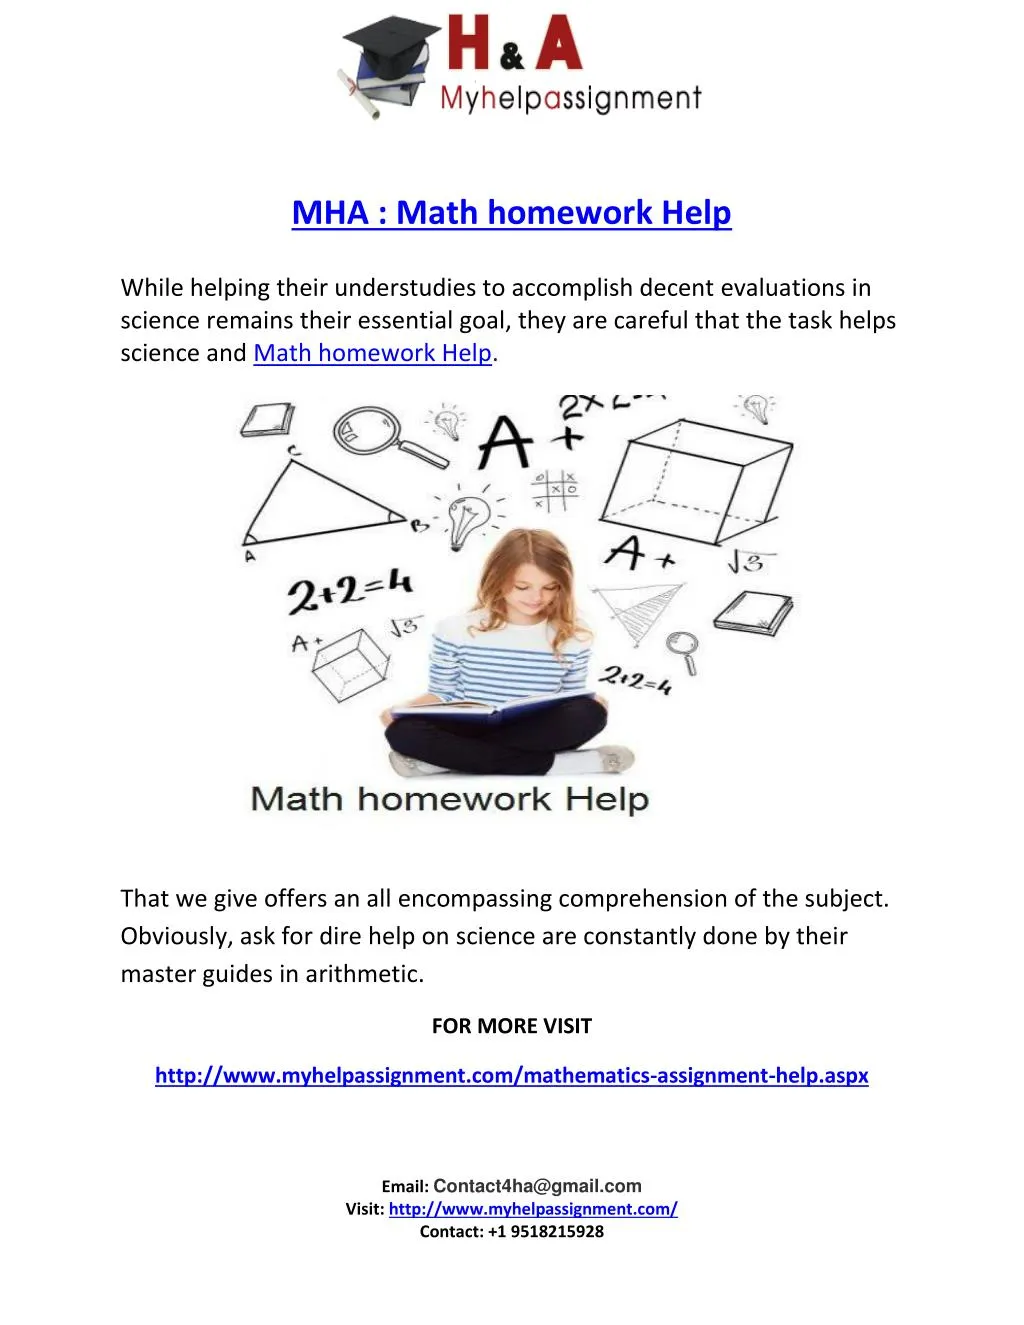 website to help with math homework